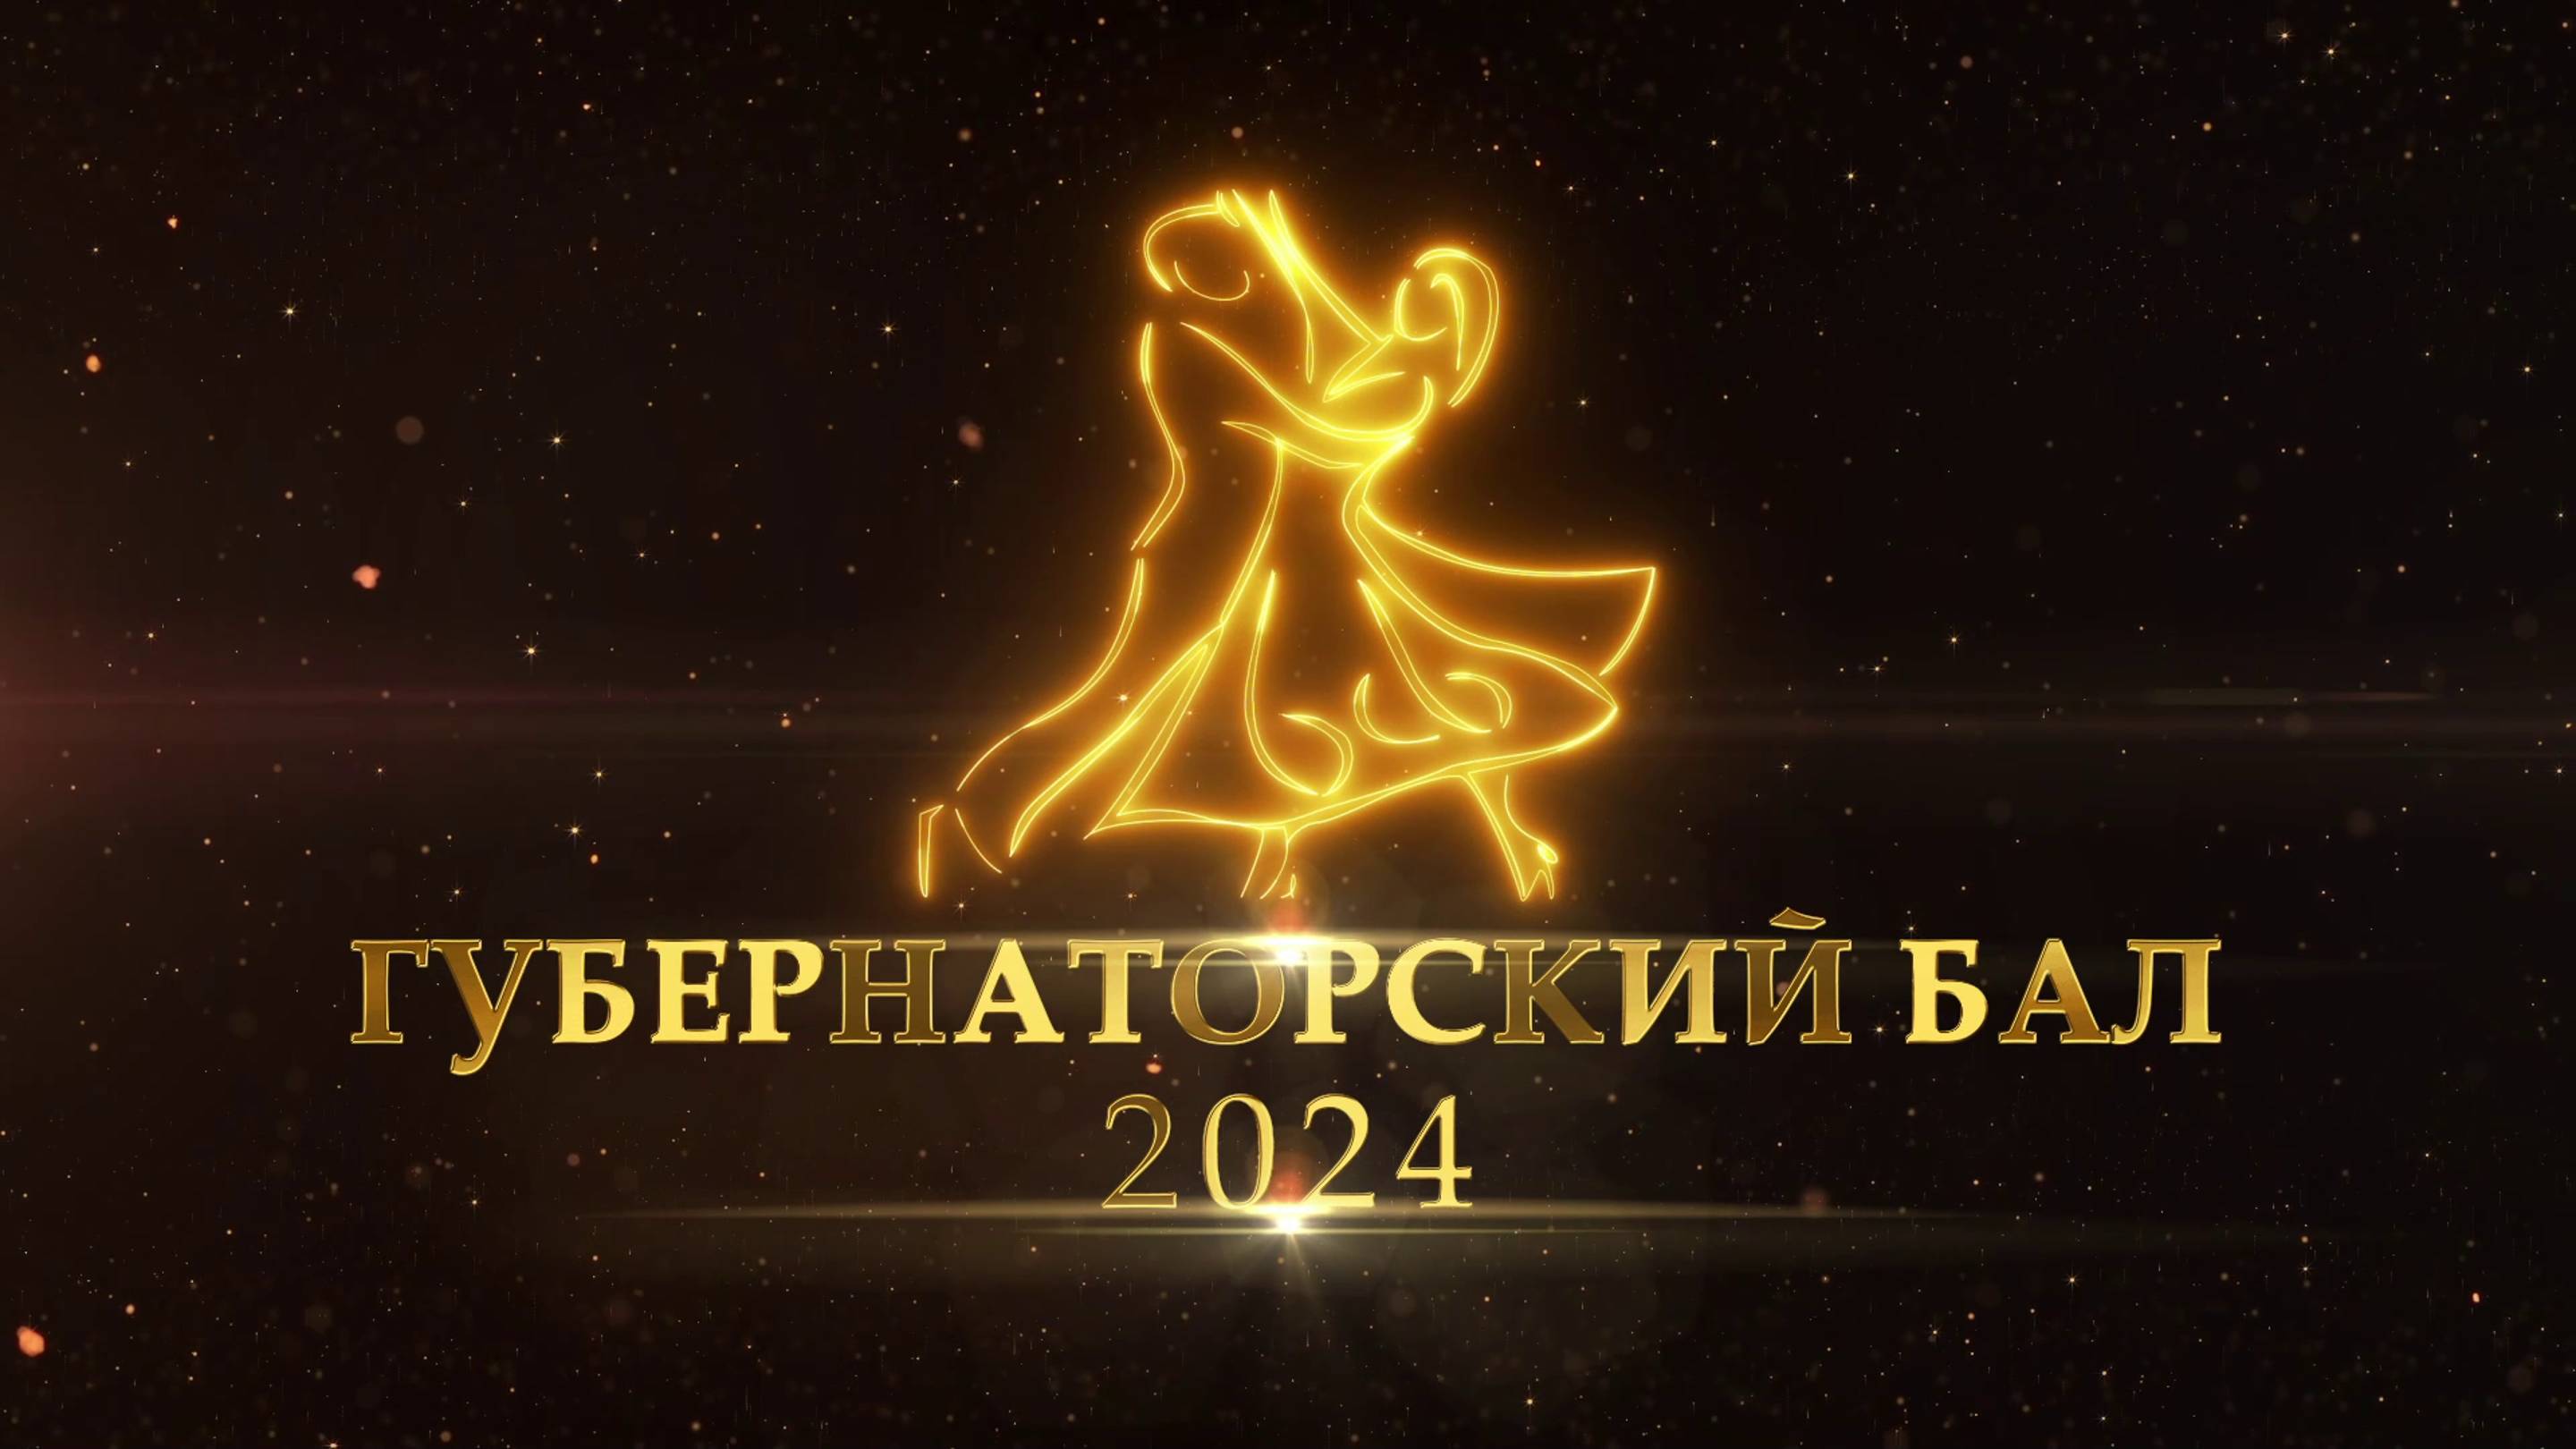 Губернаторский бал 2024 в Иркутске